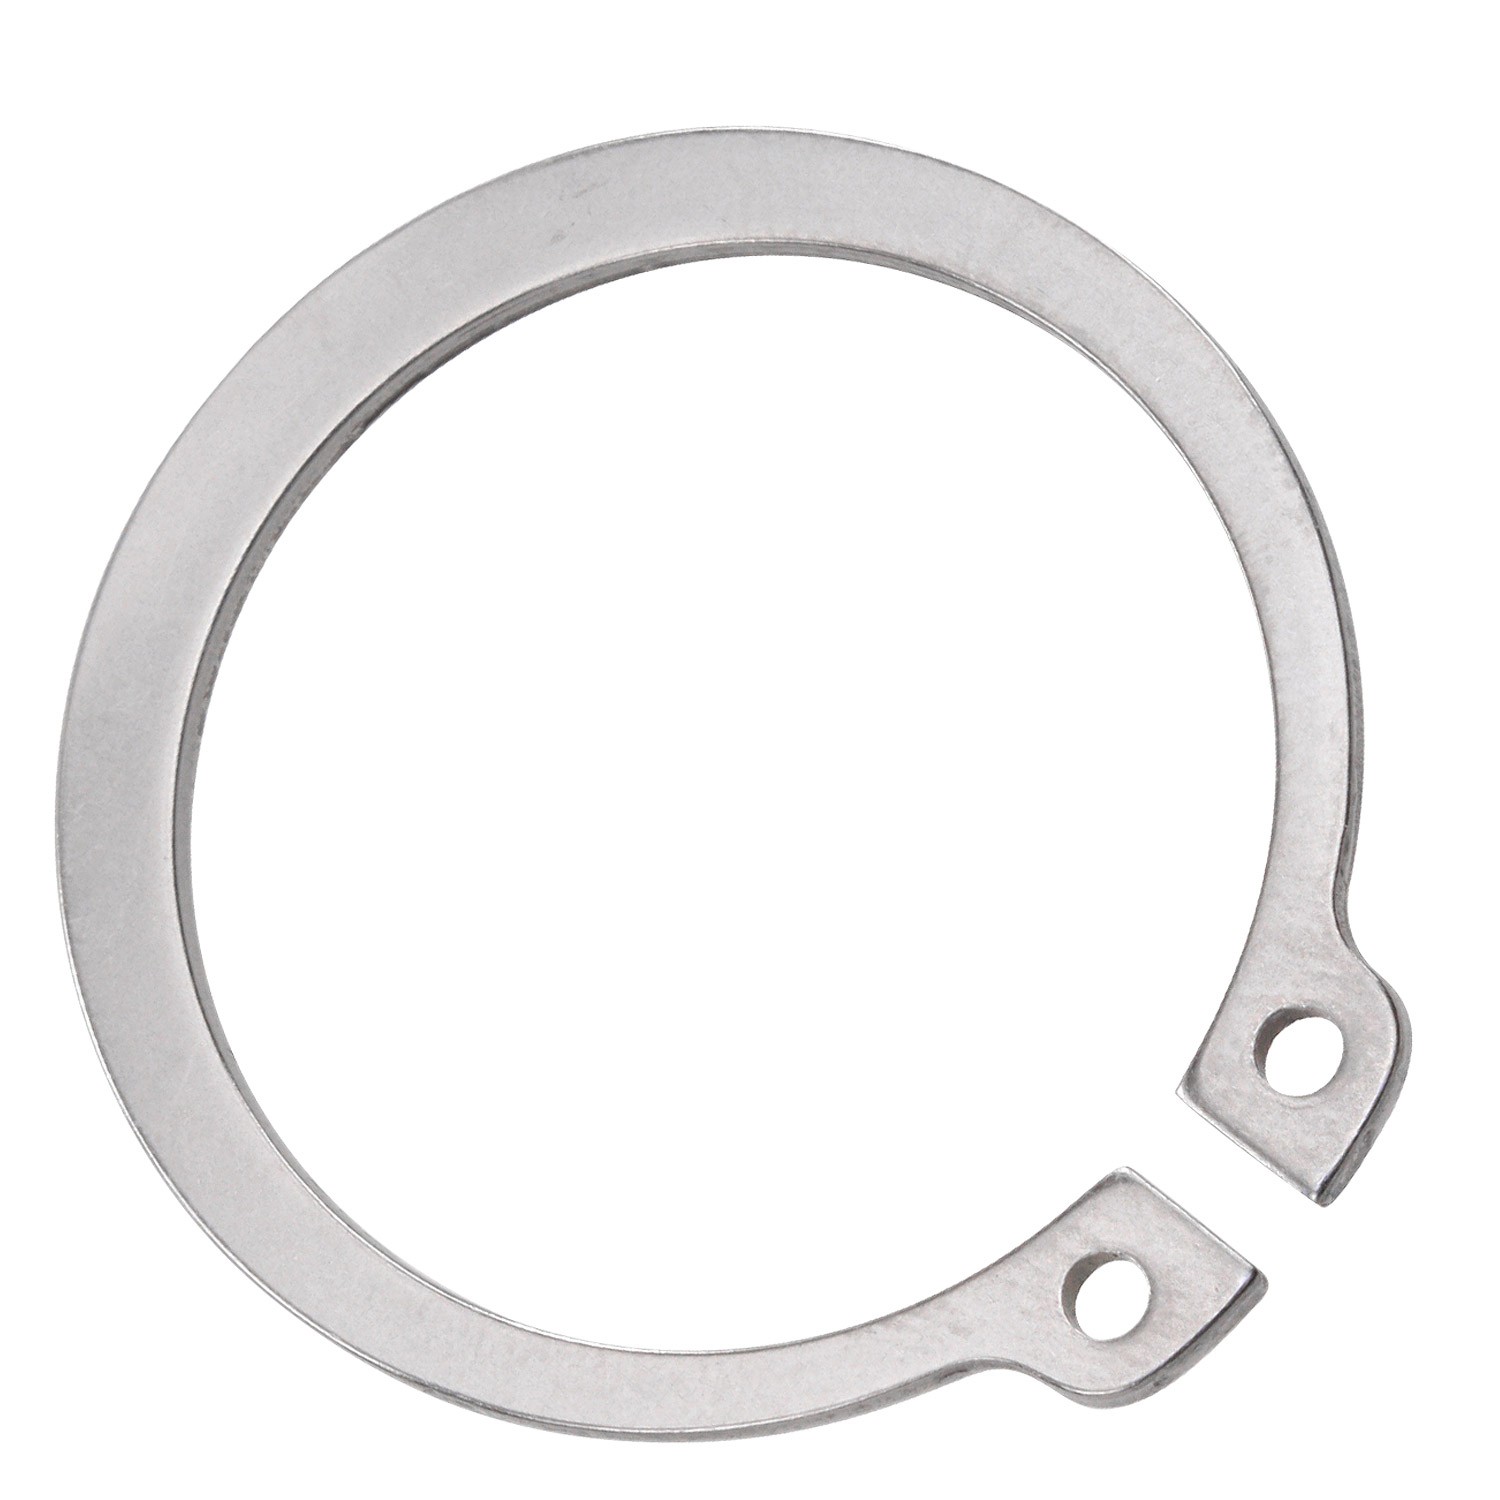 Кольцо стопорное наружное 70х2,5 DIN 471, нержавеющая сталь 1.4122 (А2) - фото